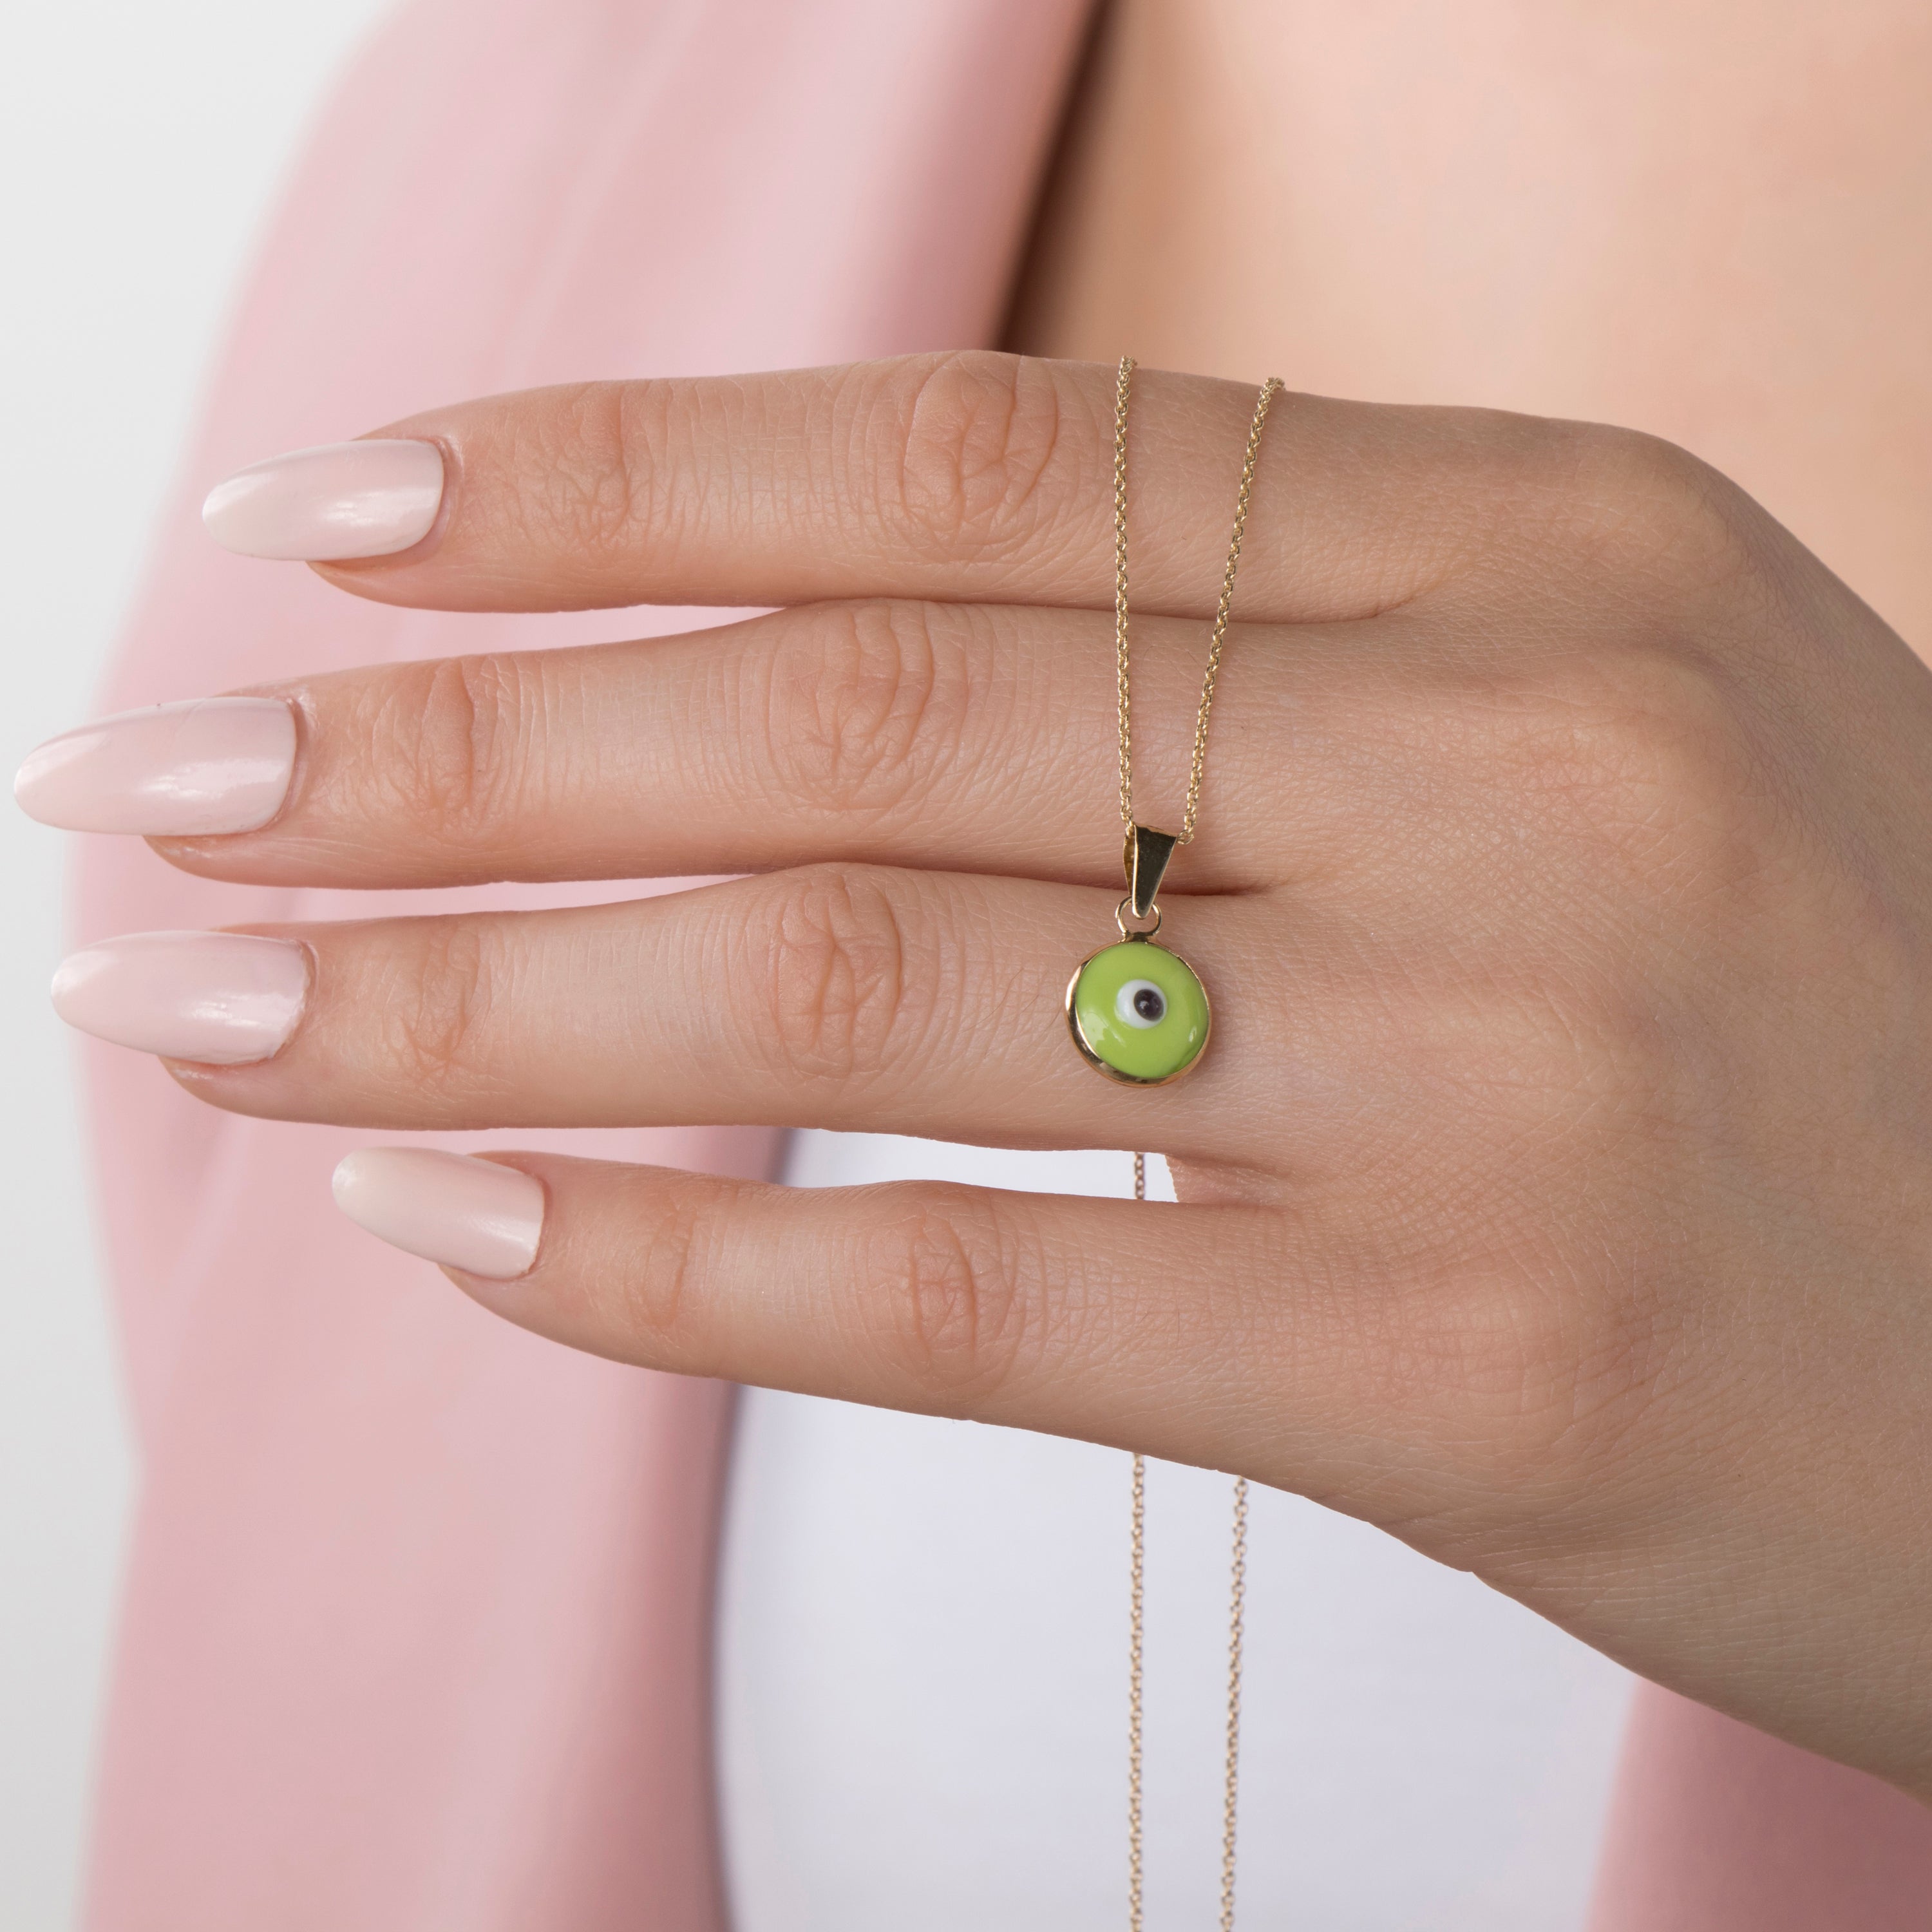 Lime Green Evil Eye Pendant Necklace in 14K Gold